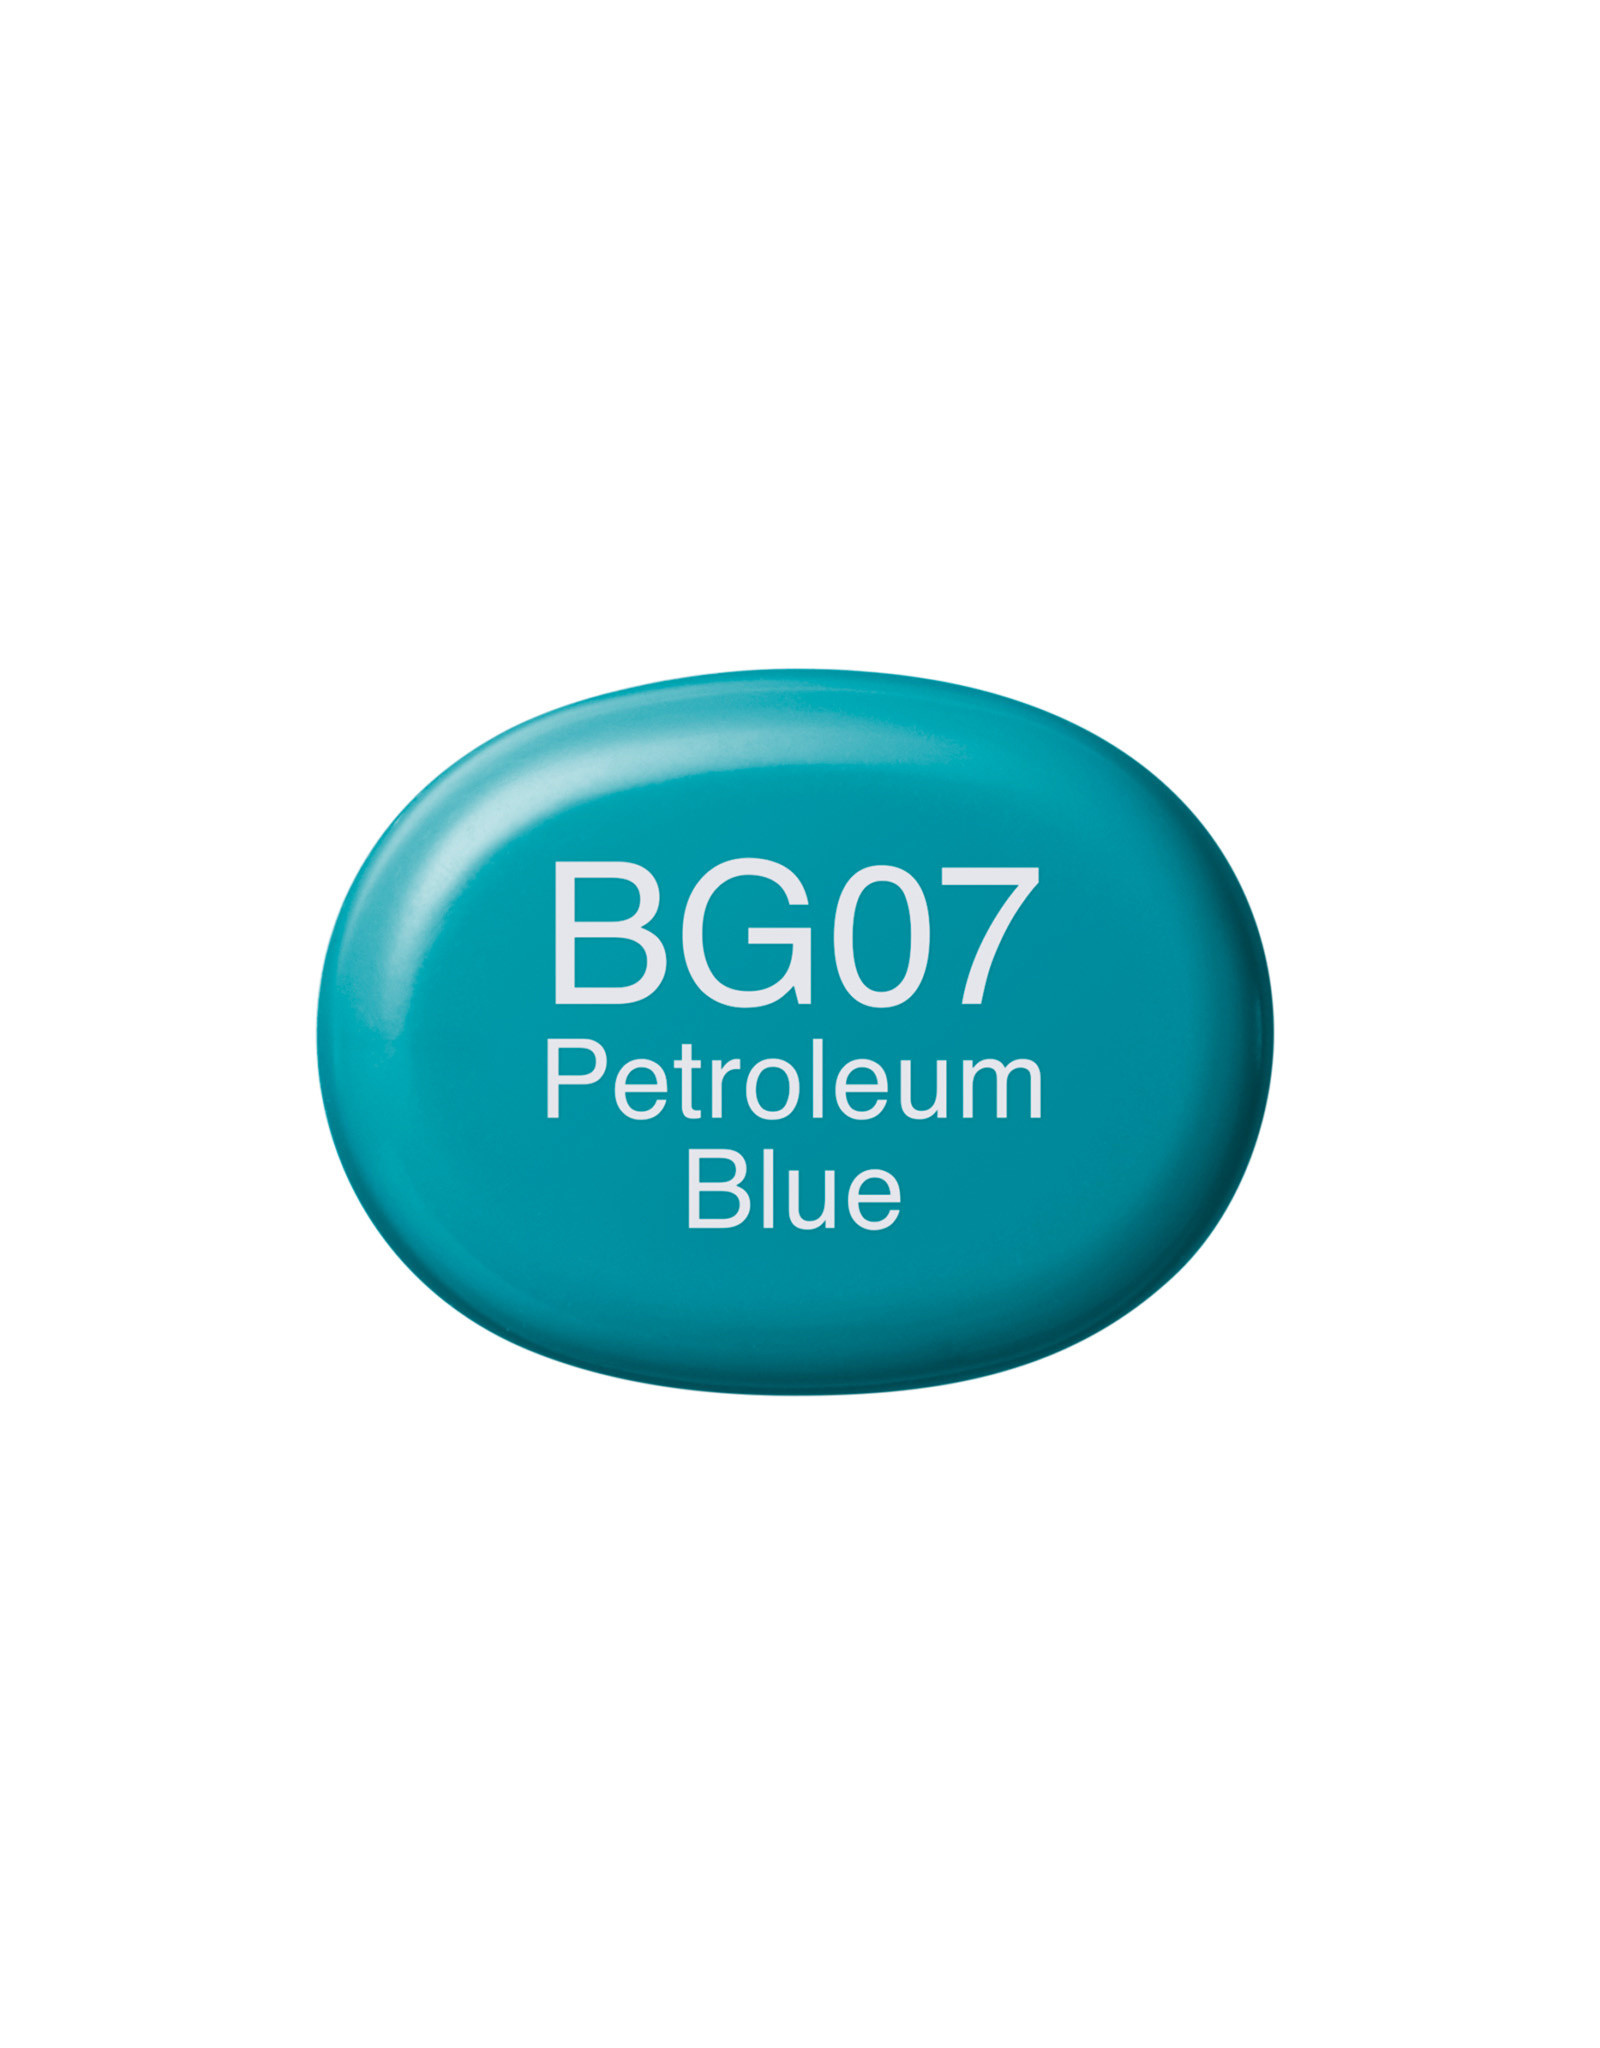 COPIC COPIC Sketch Marker BG07 Petroleum Blue